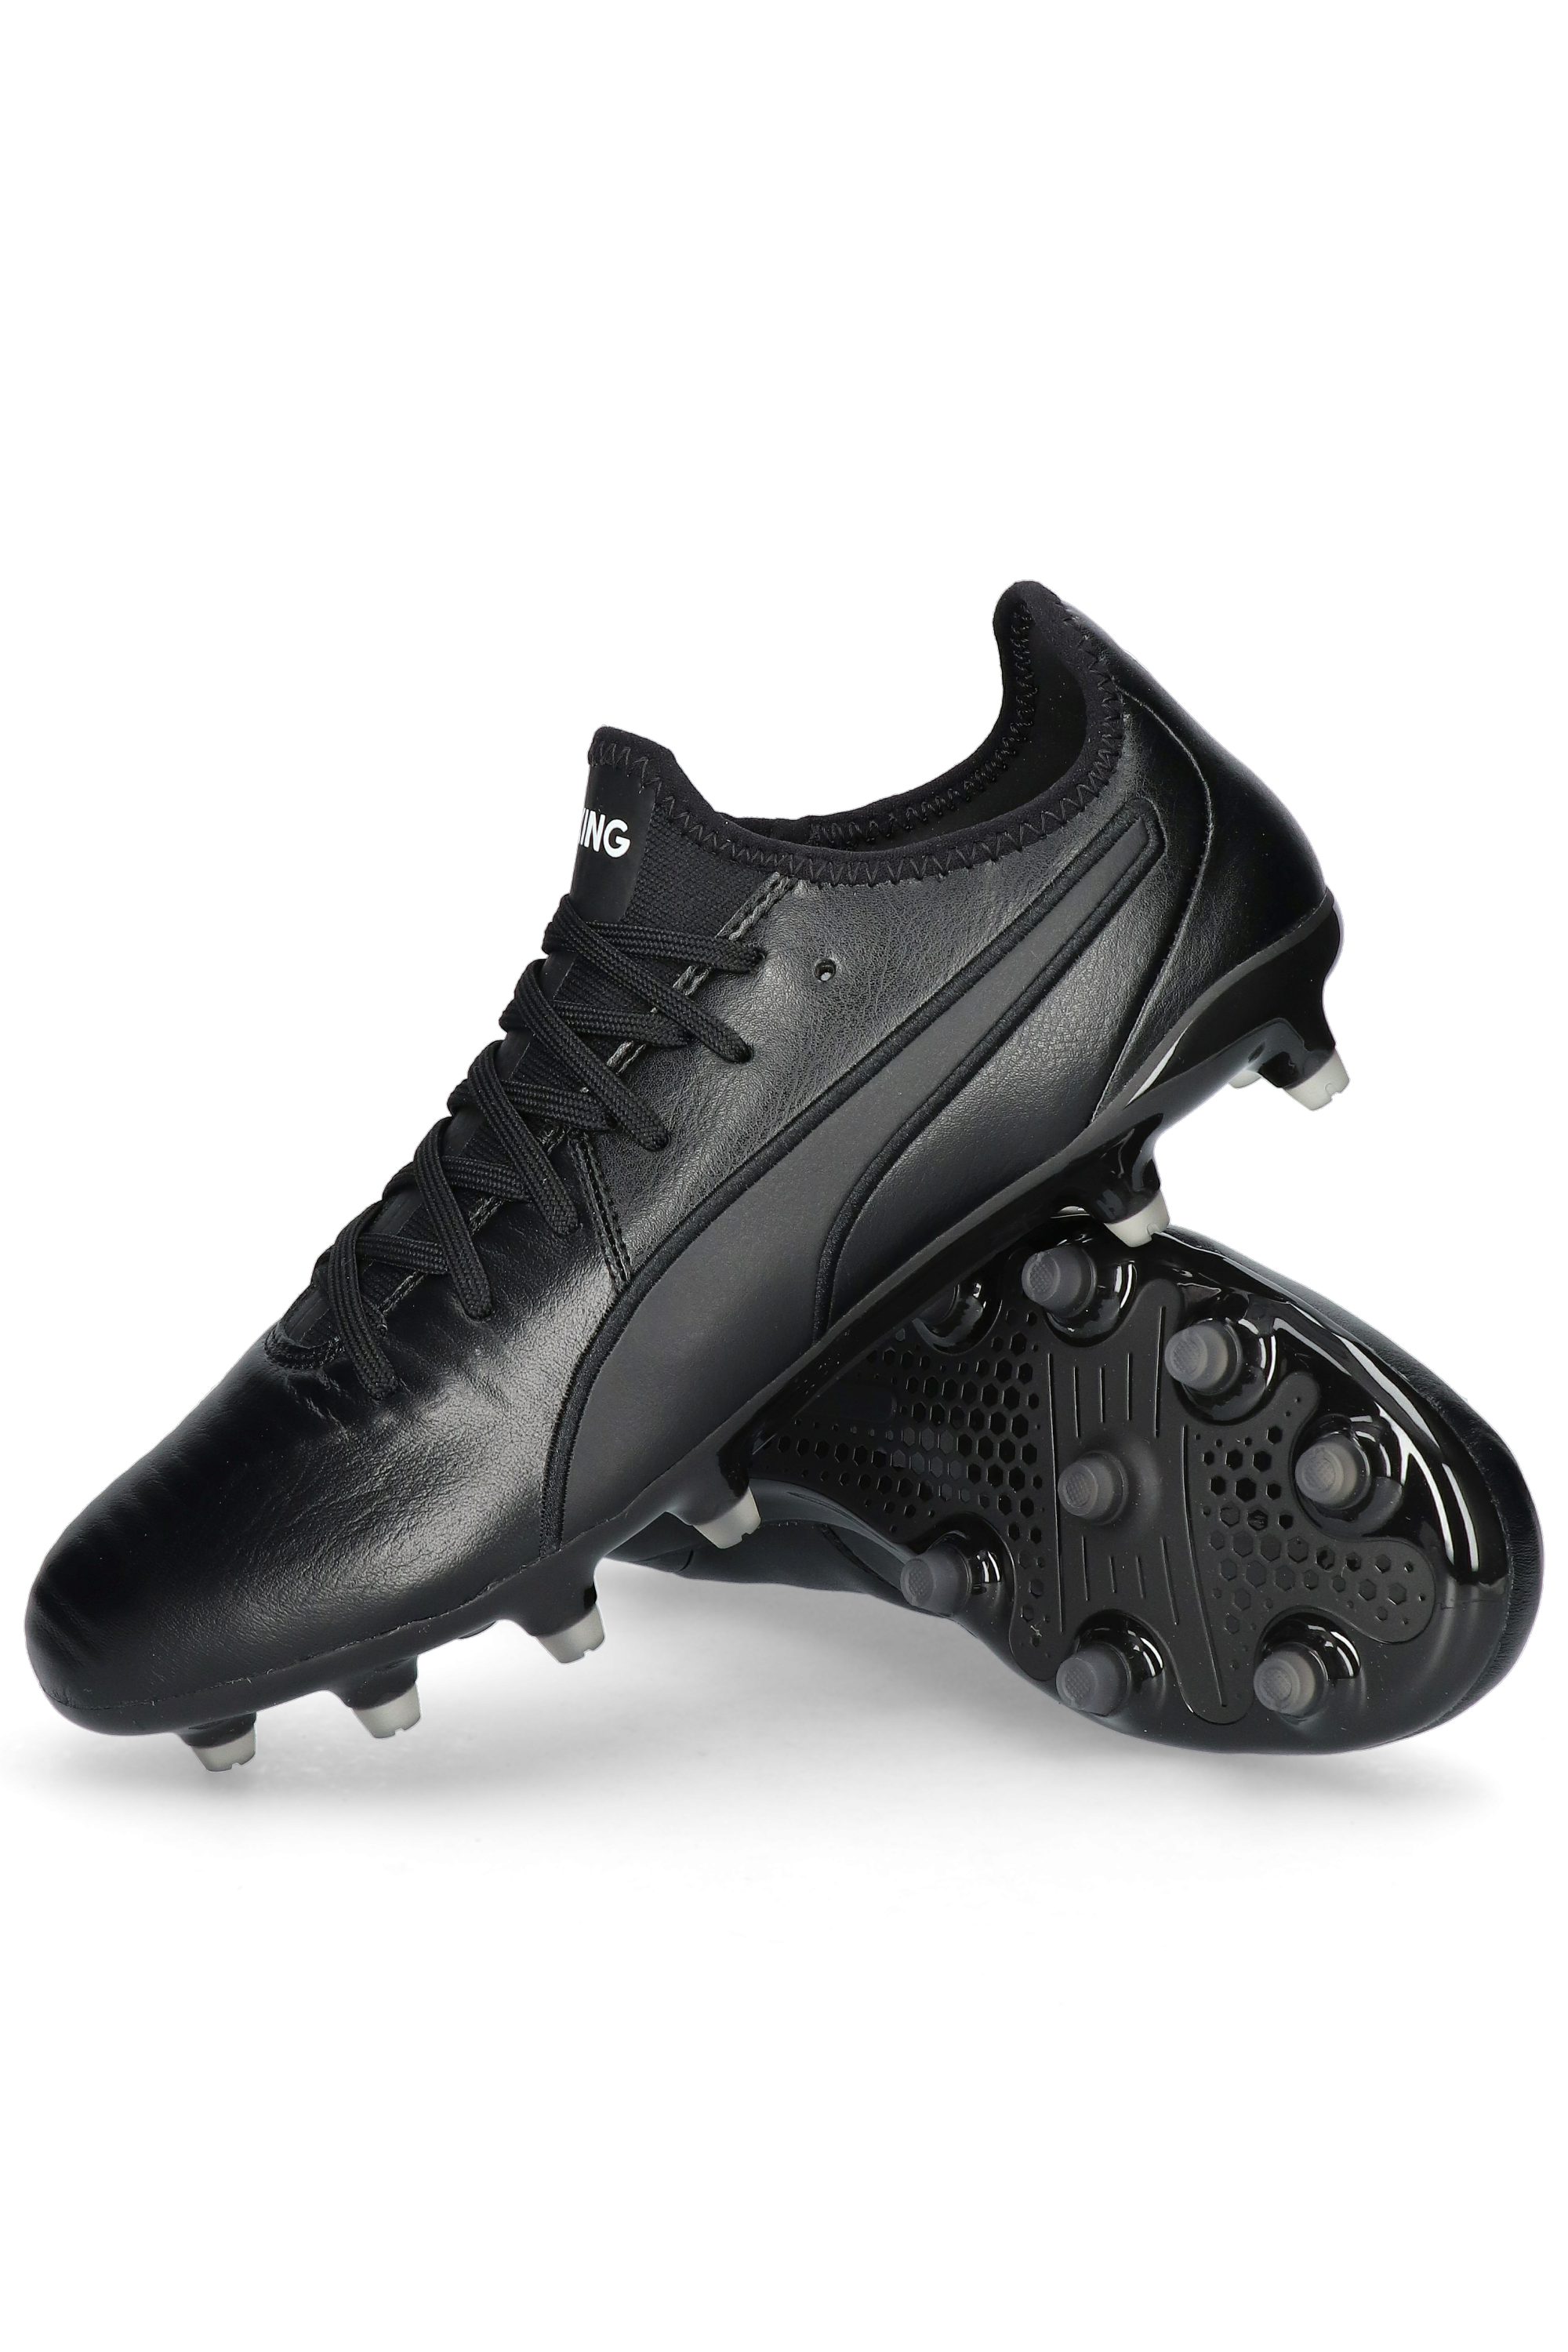 Puma King Pro FG | - Football boots & equipment